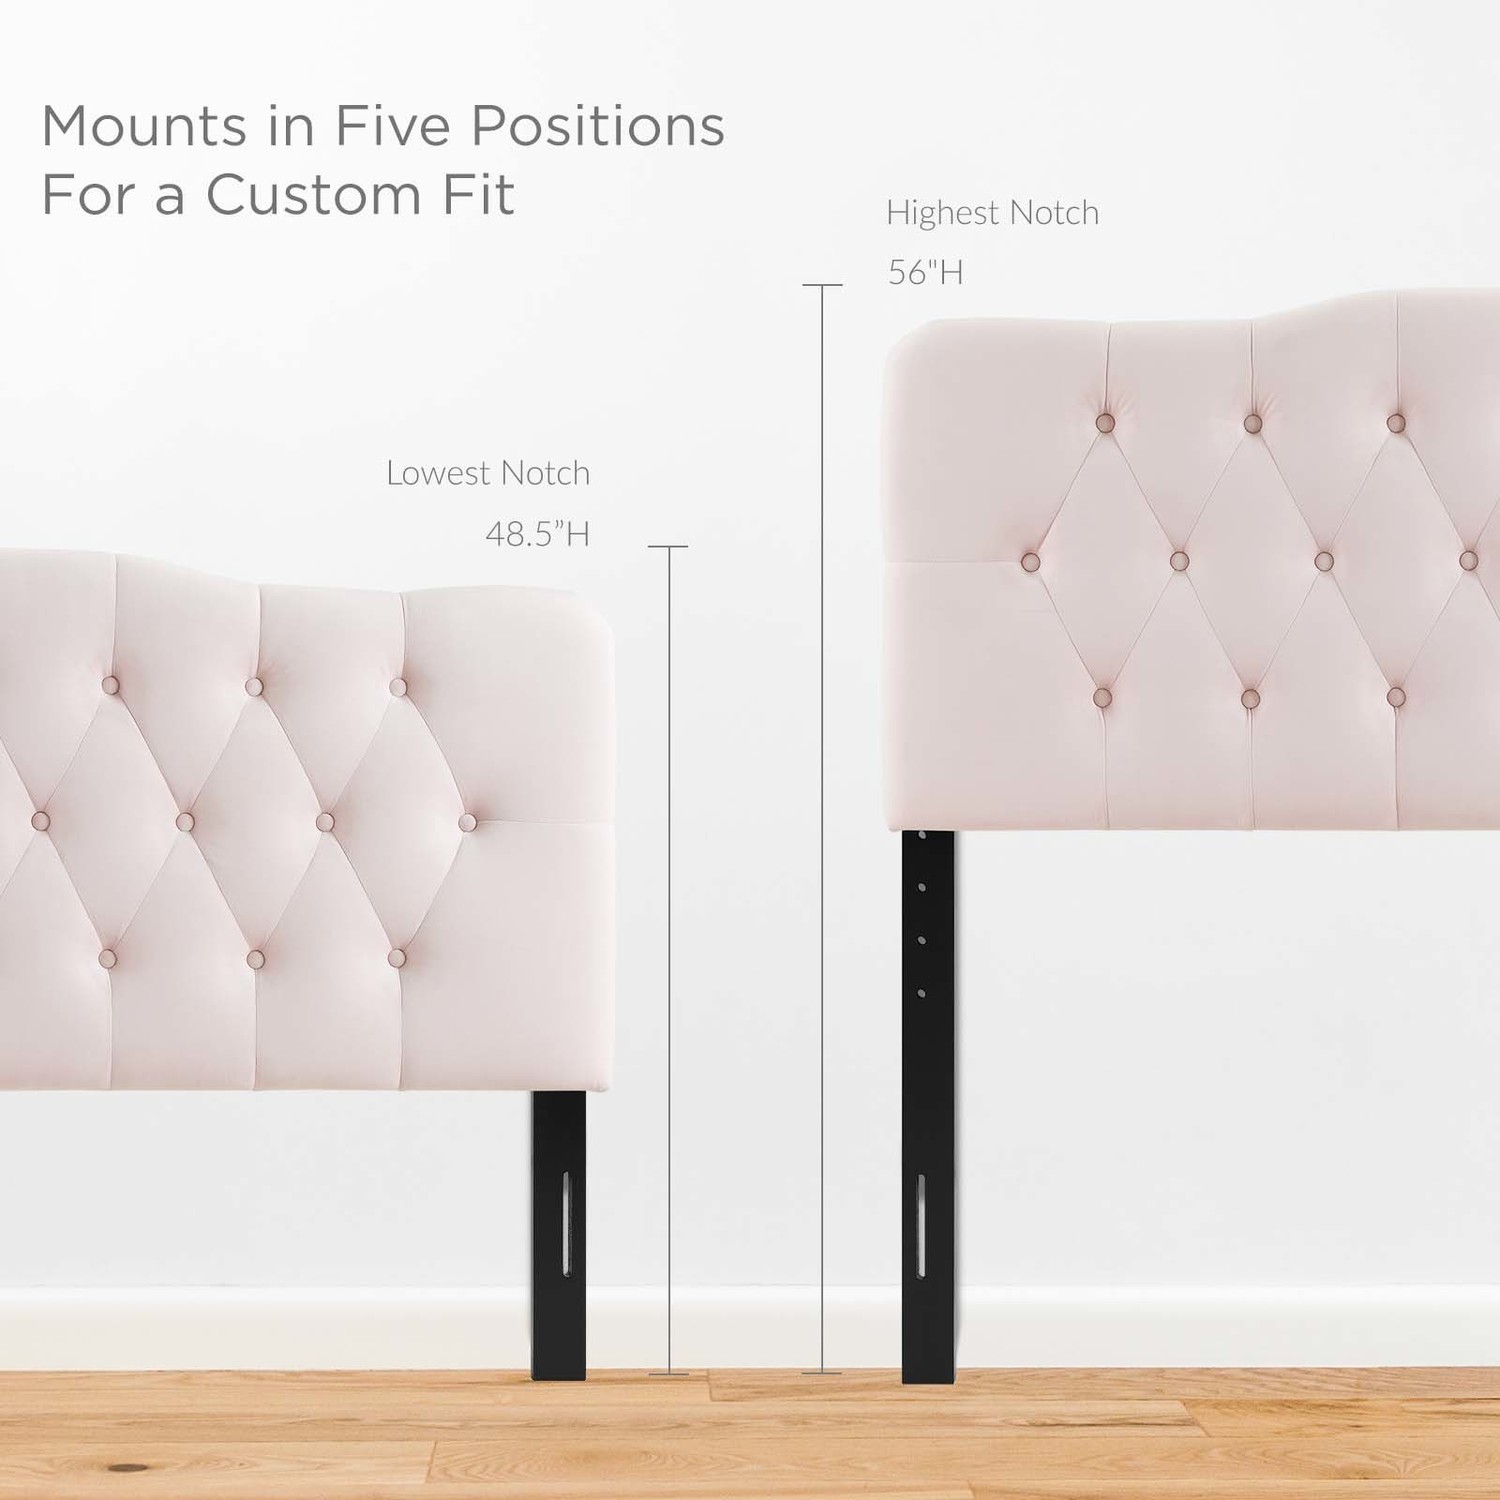 mattress headboard and frame Modway Furniture Headboards Pink